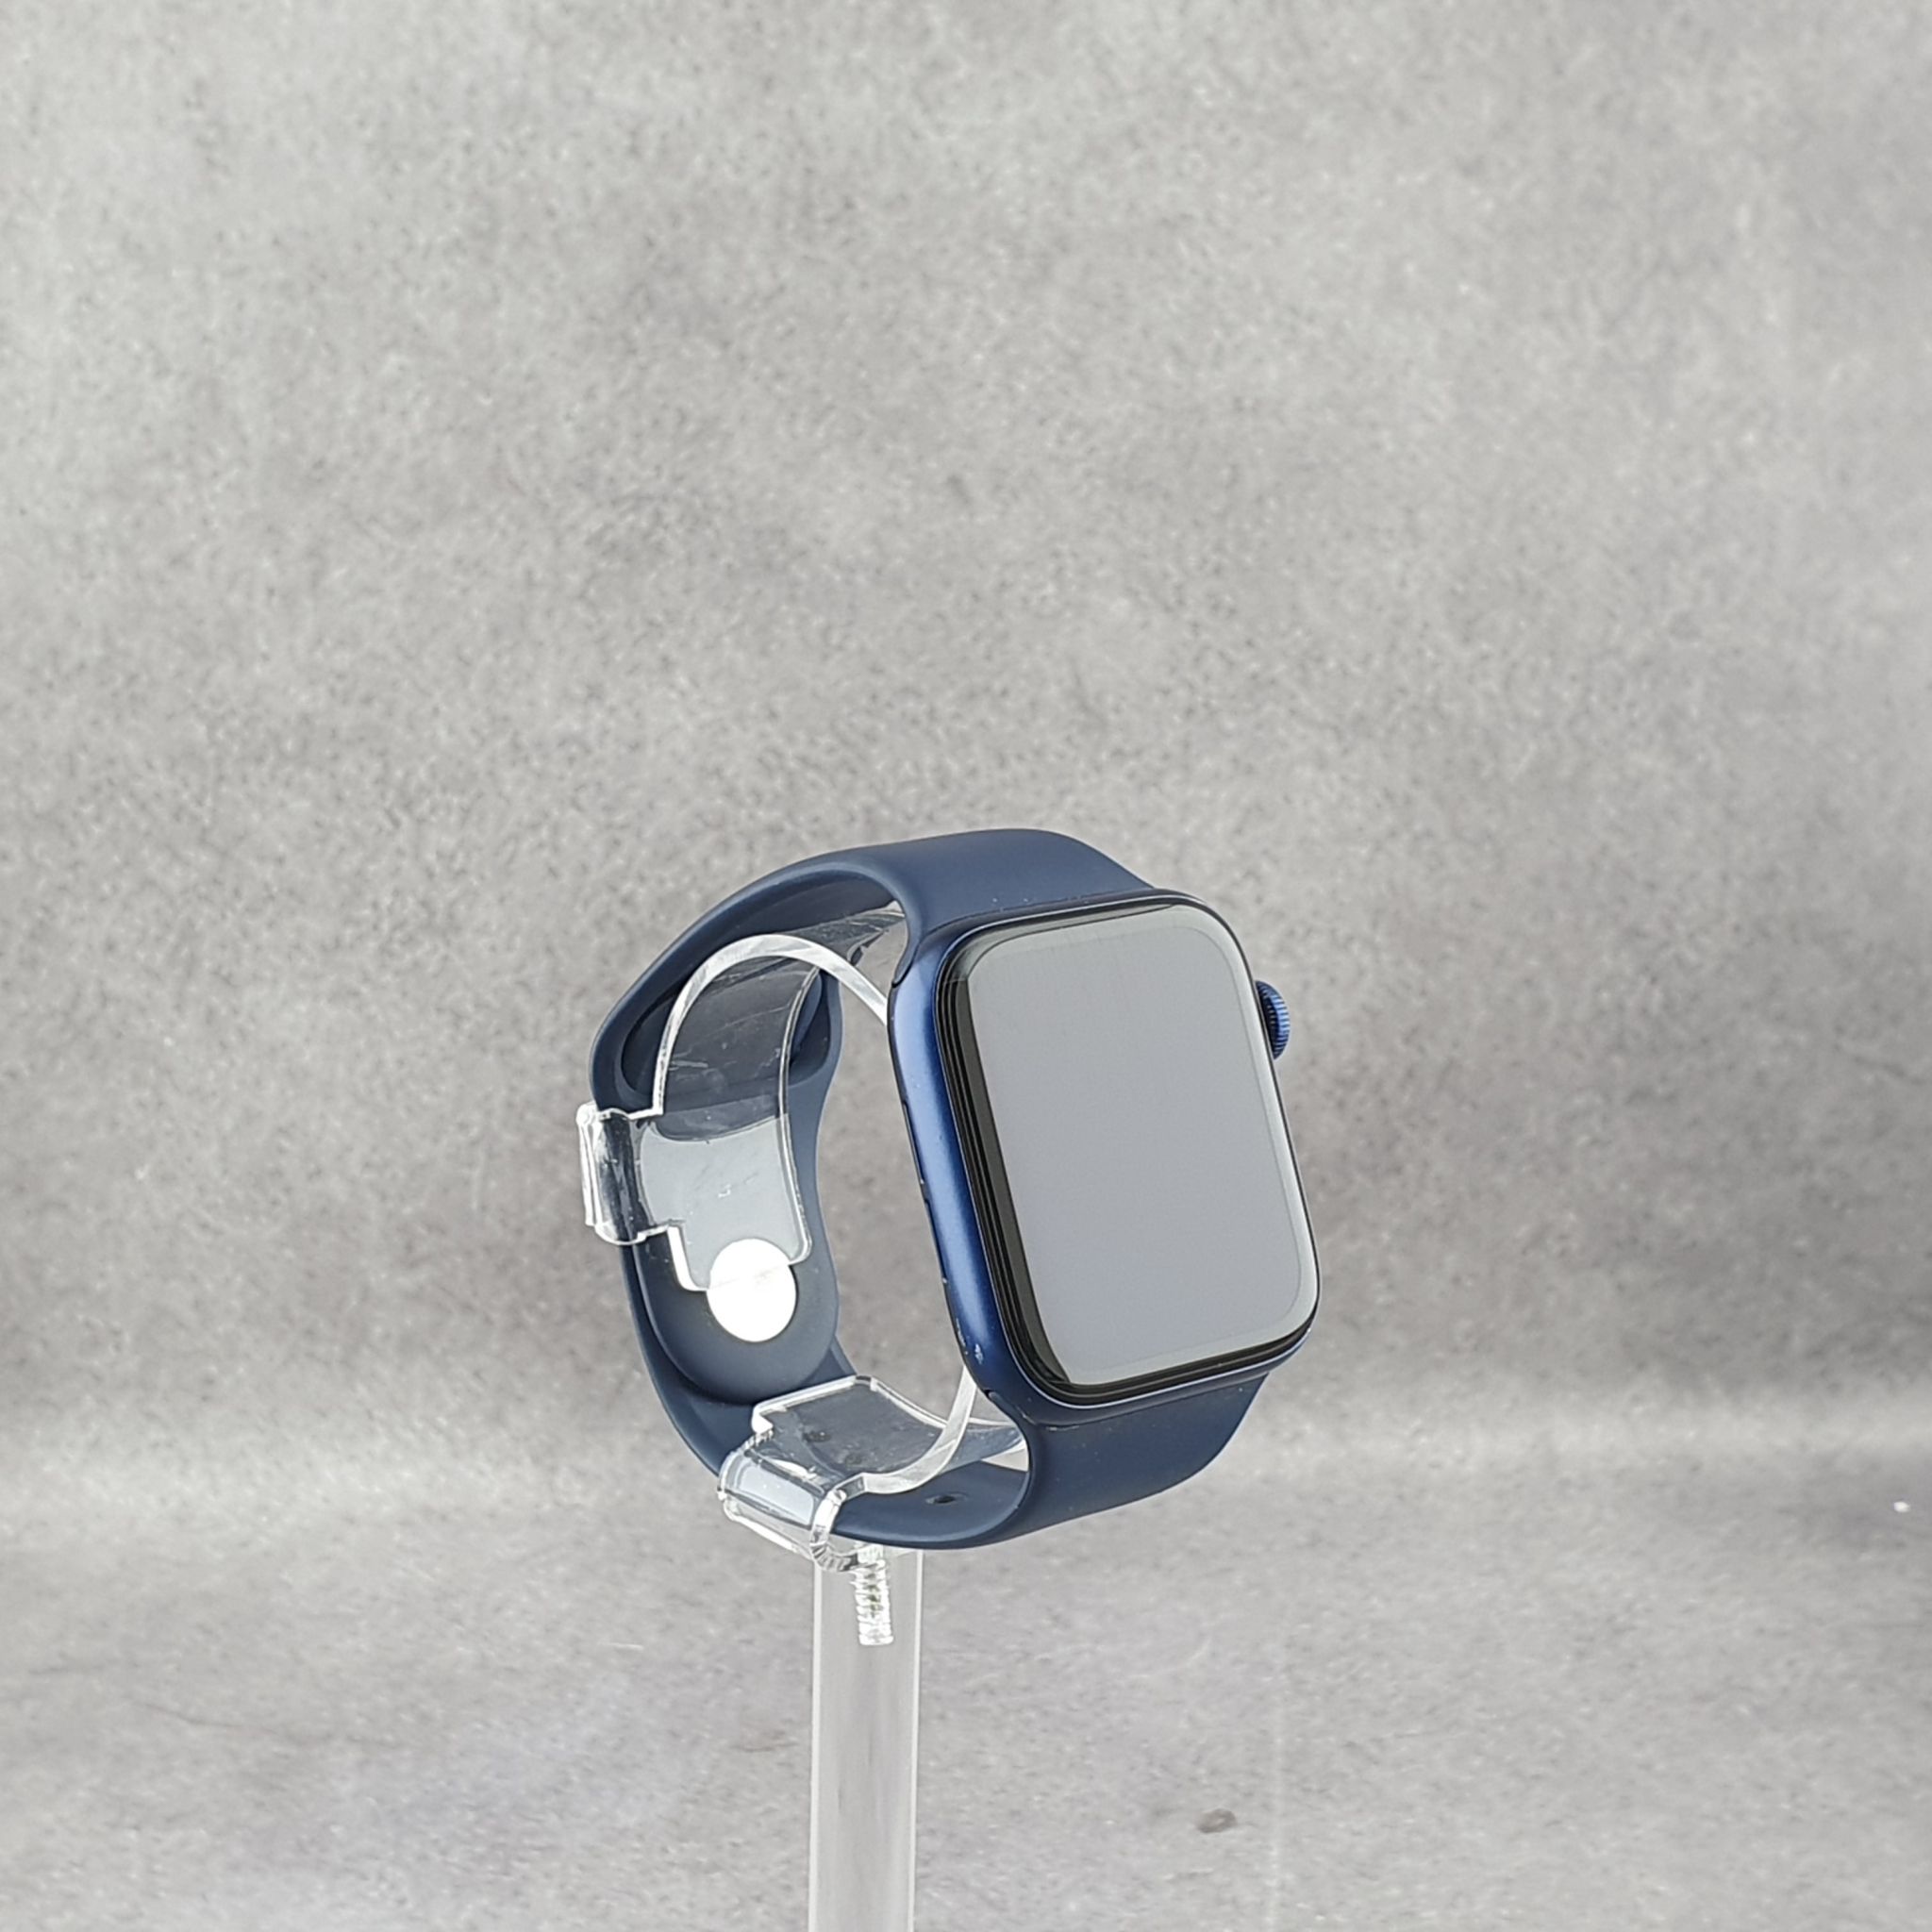 Apple Watch Series 6 - Фото